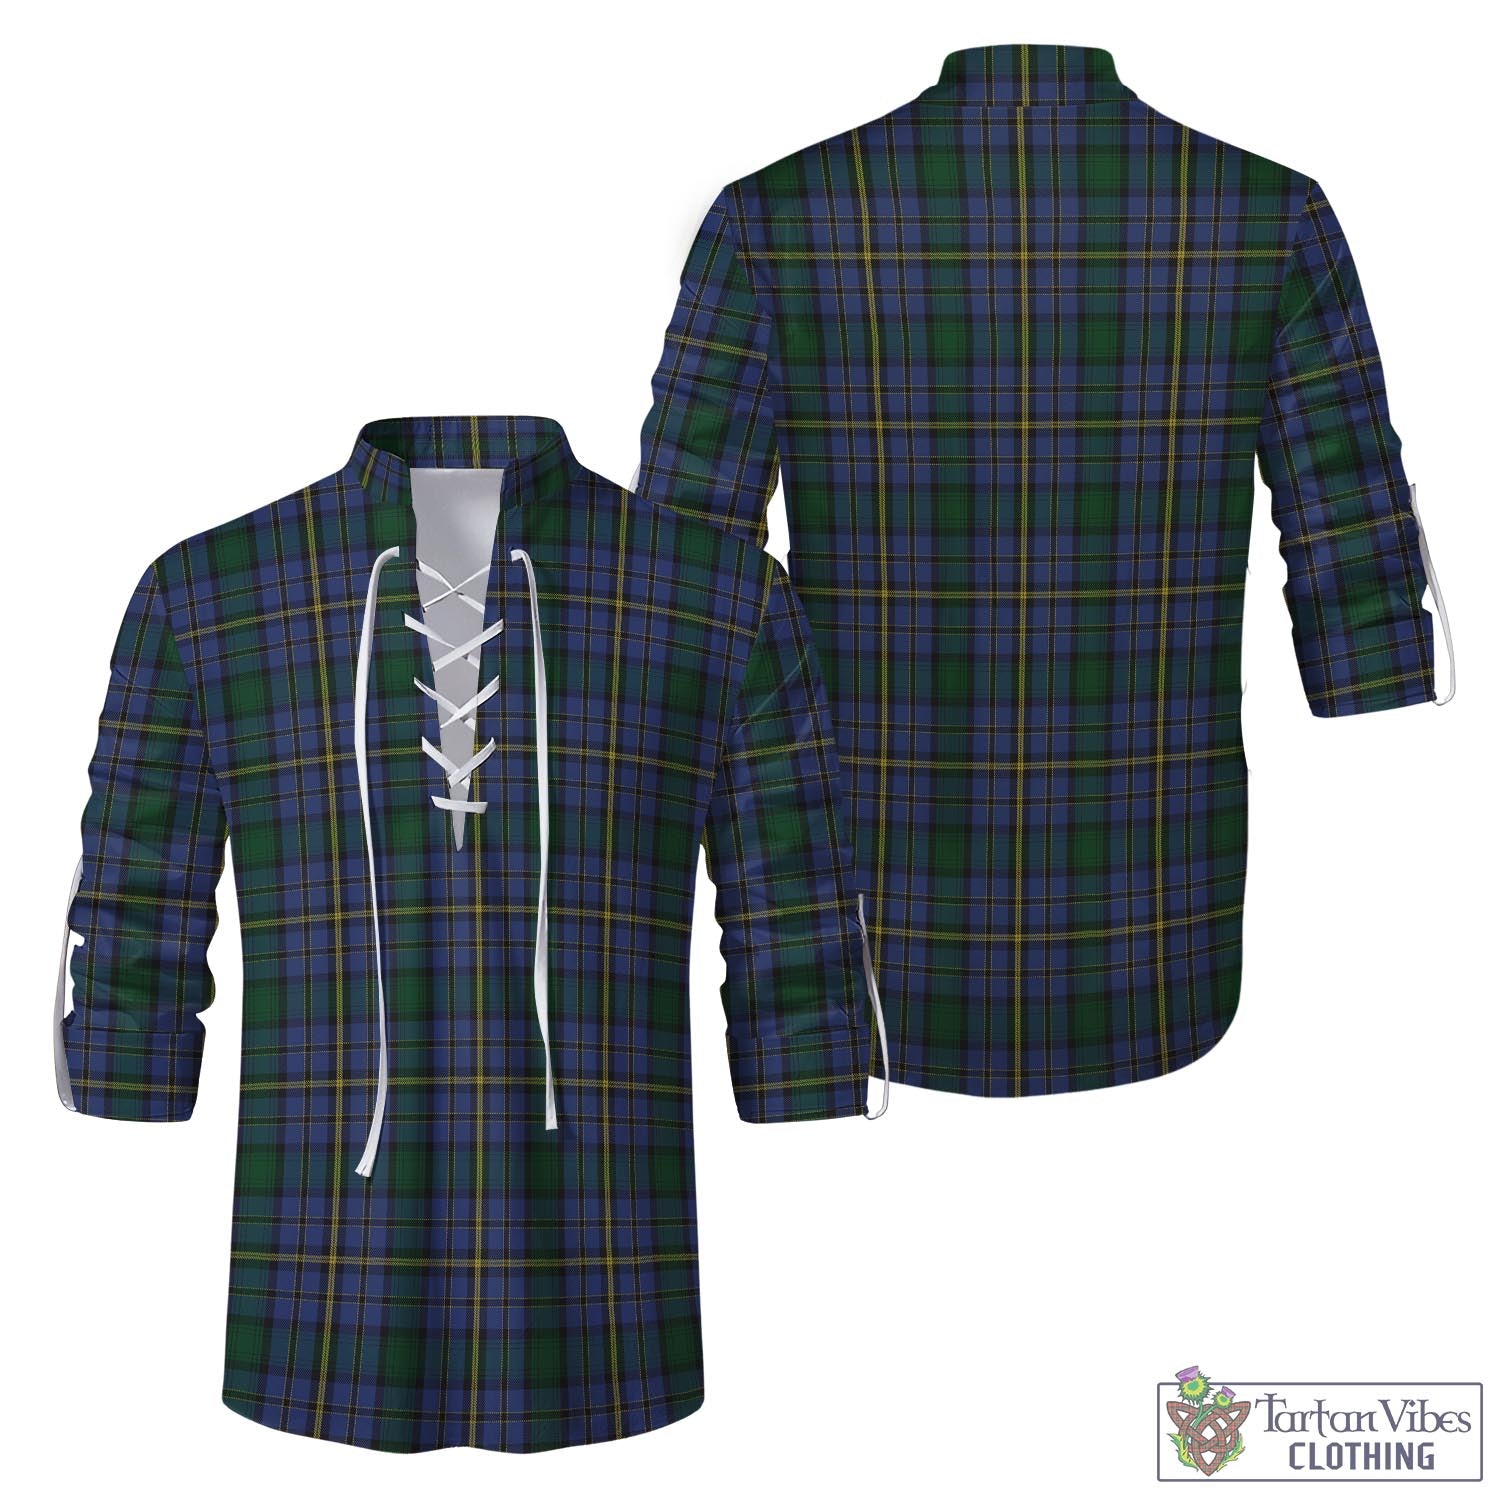 Tartan Vibes Clothing Hope Clan Originaux Tartan Men's Scottish Traditional Jacobite Ghillie Kilt Shirt